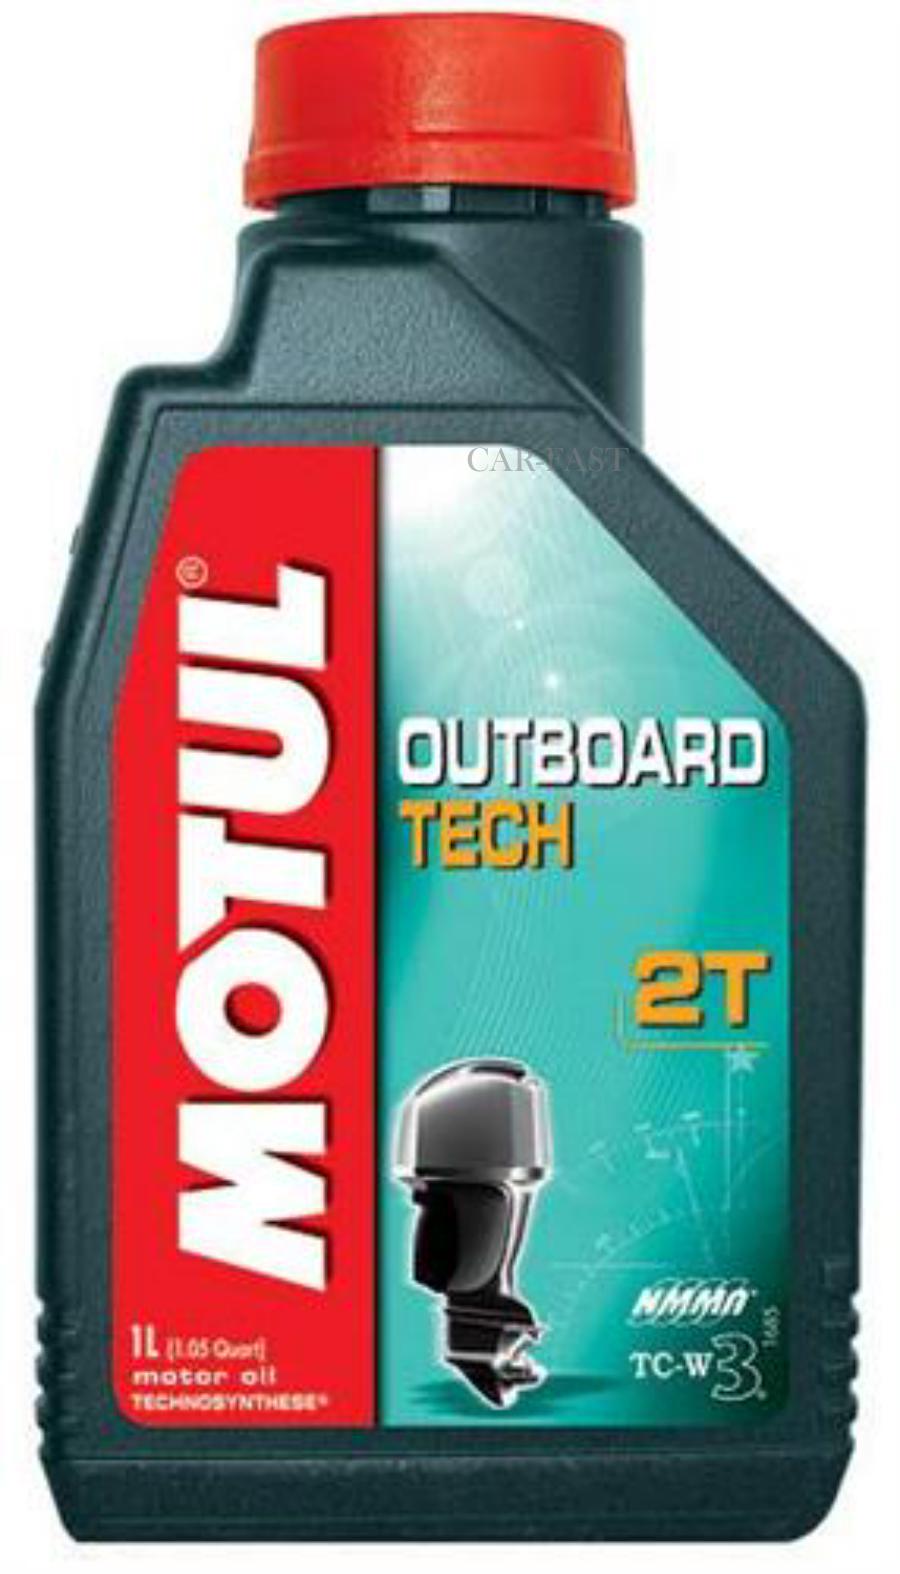 Motul outboard Tech 2t 1 л. Масло Motul outboard Tech 2t. Motul outboard 2t 1л. Масло 2-х тактное Motul outboard 2t. Масло мотюль 2т для лодочных